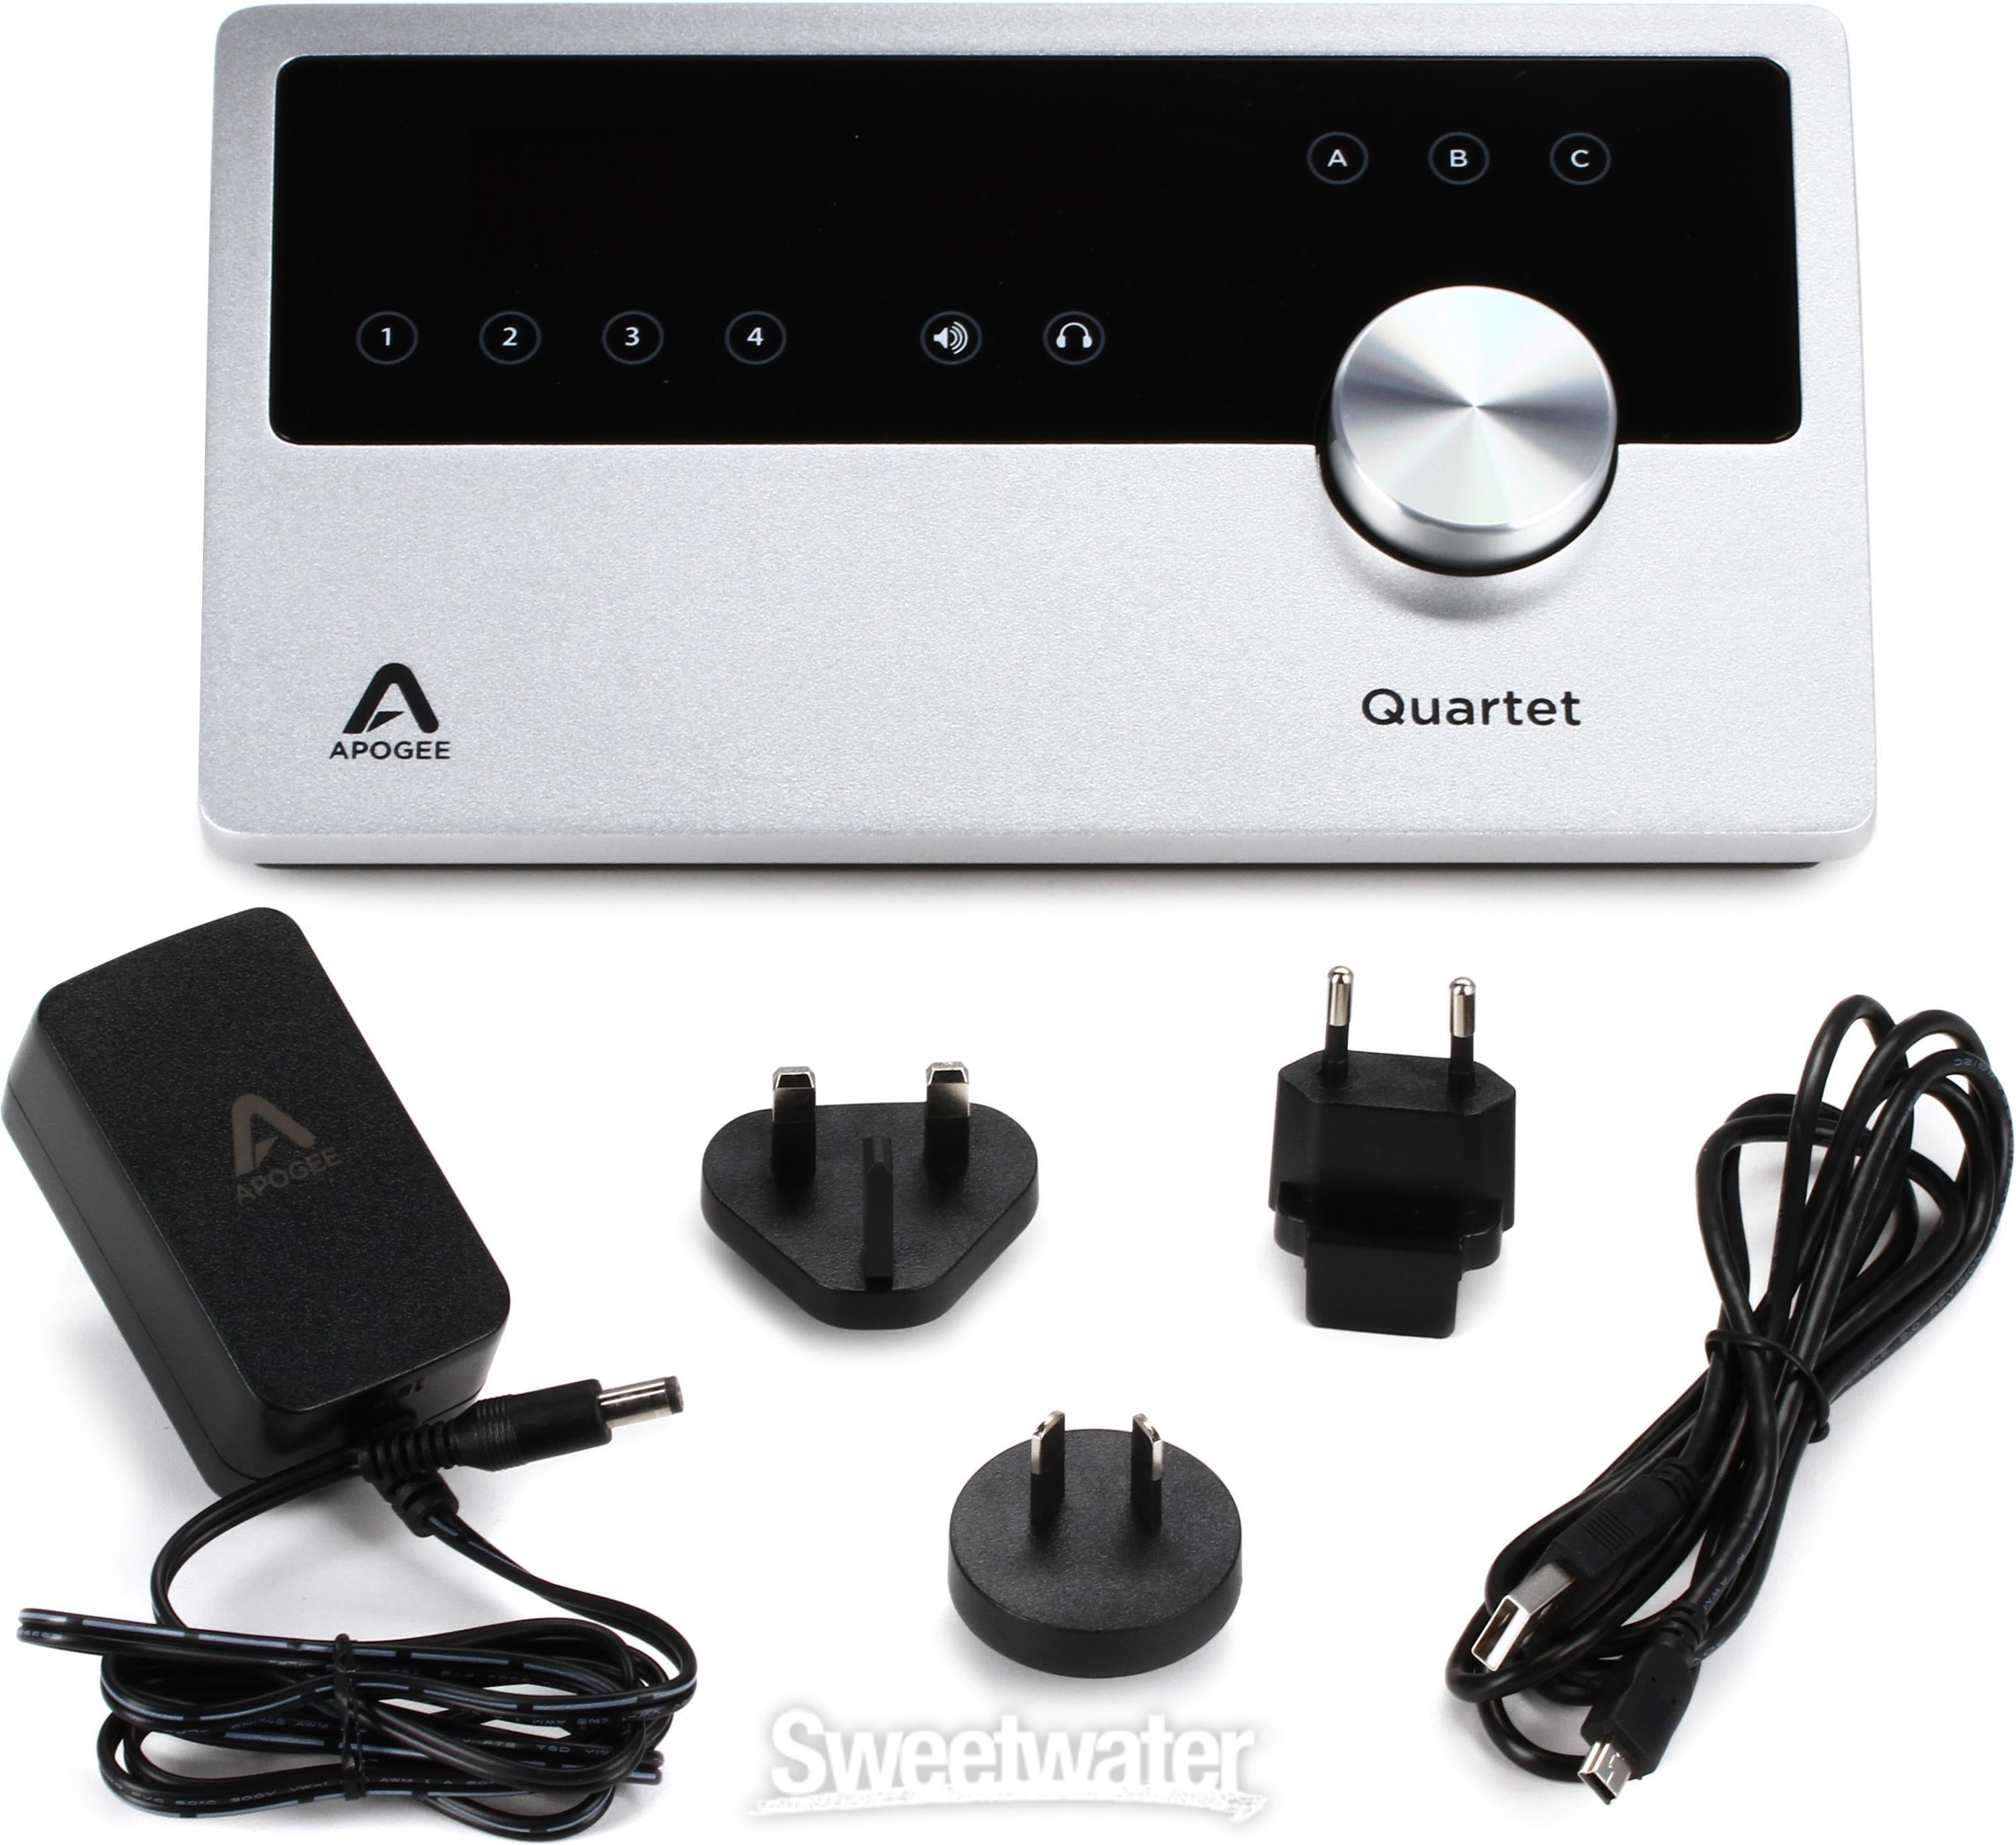 Apogee Quartet Desktop Audio Interface Reviews | Sweetwater